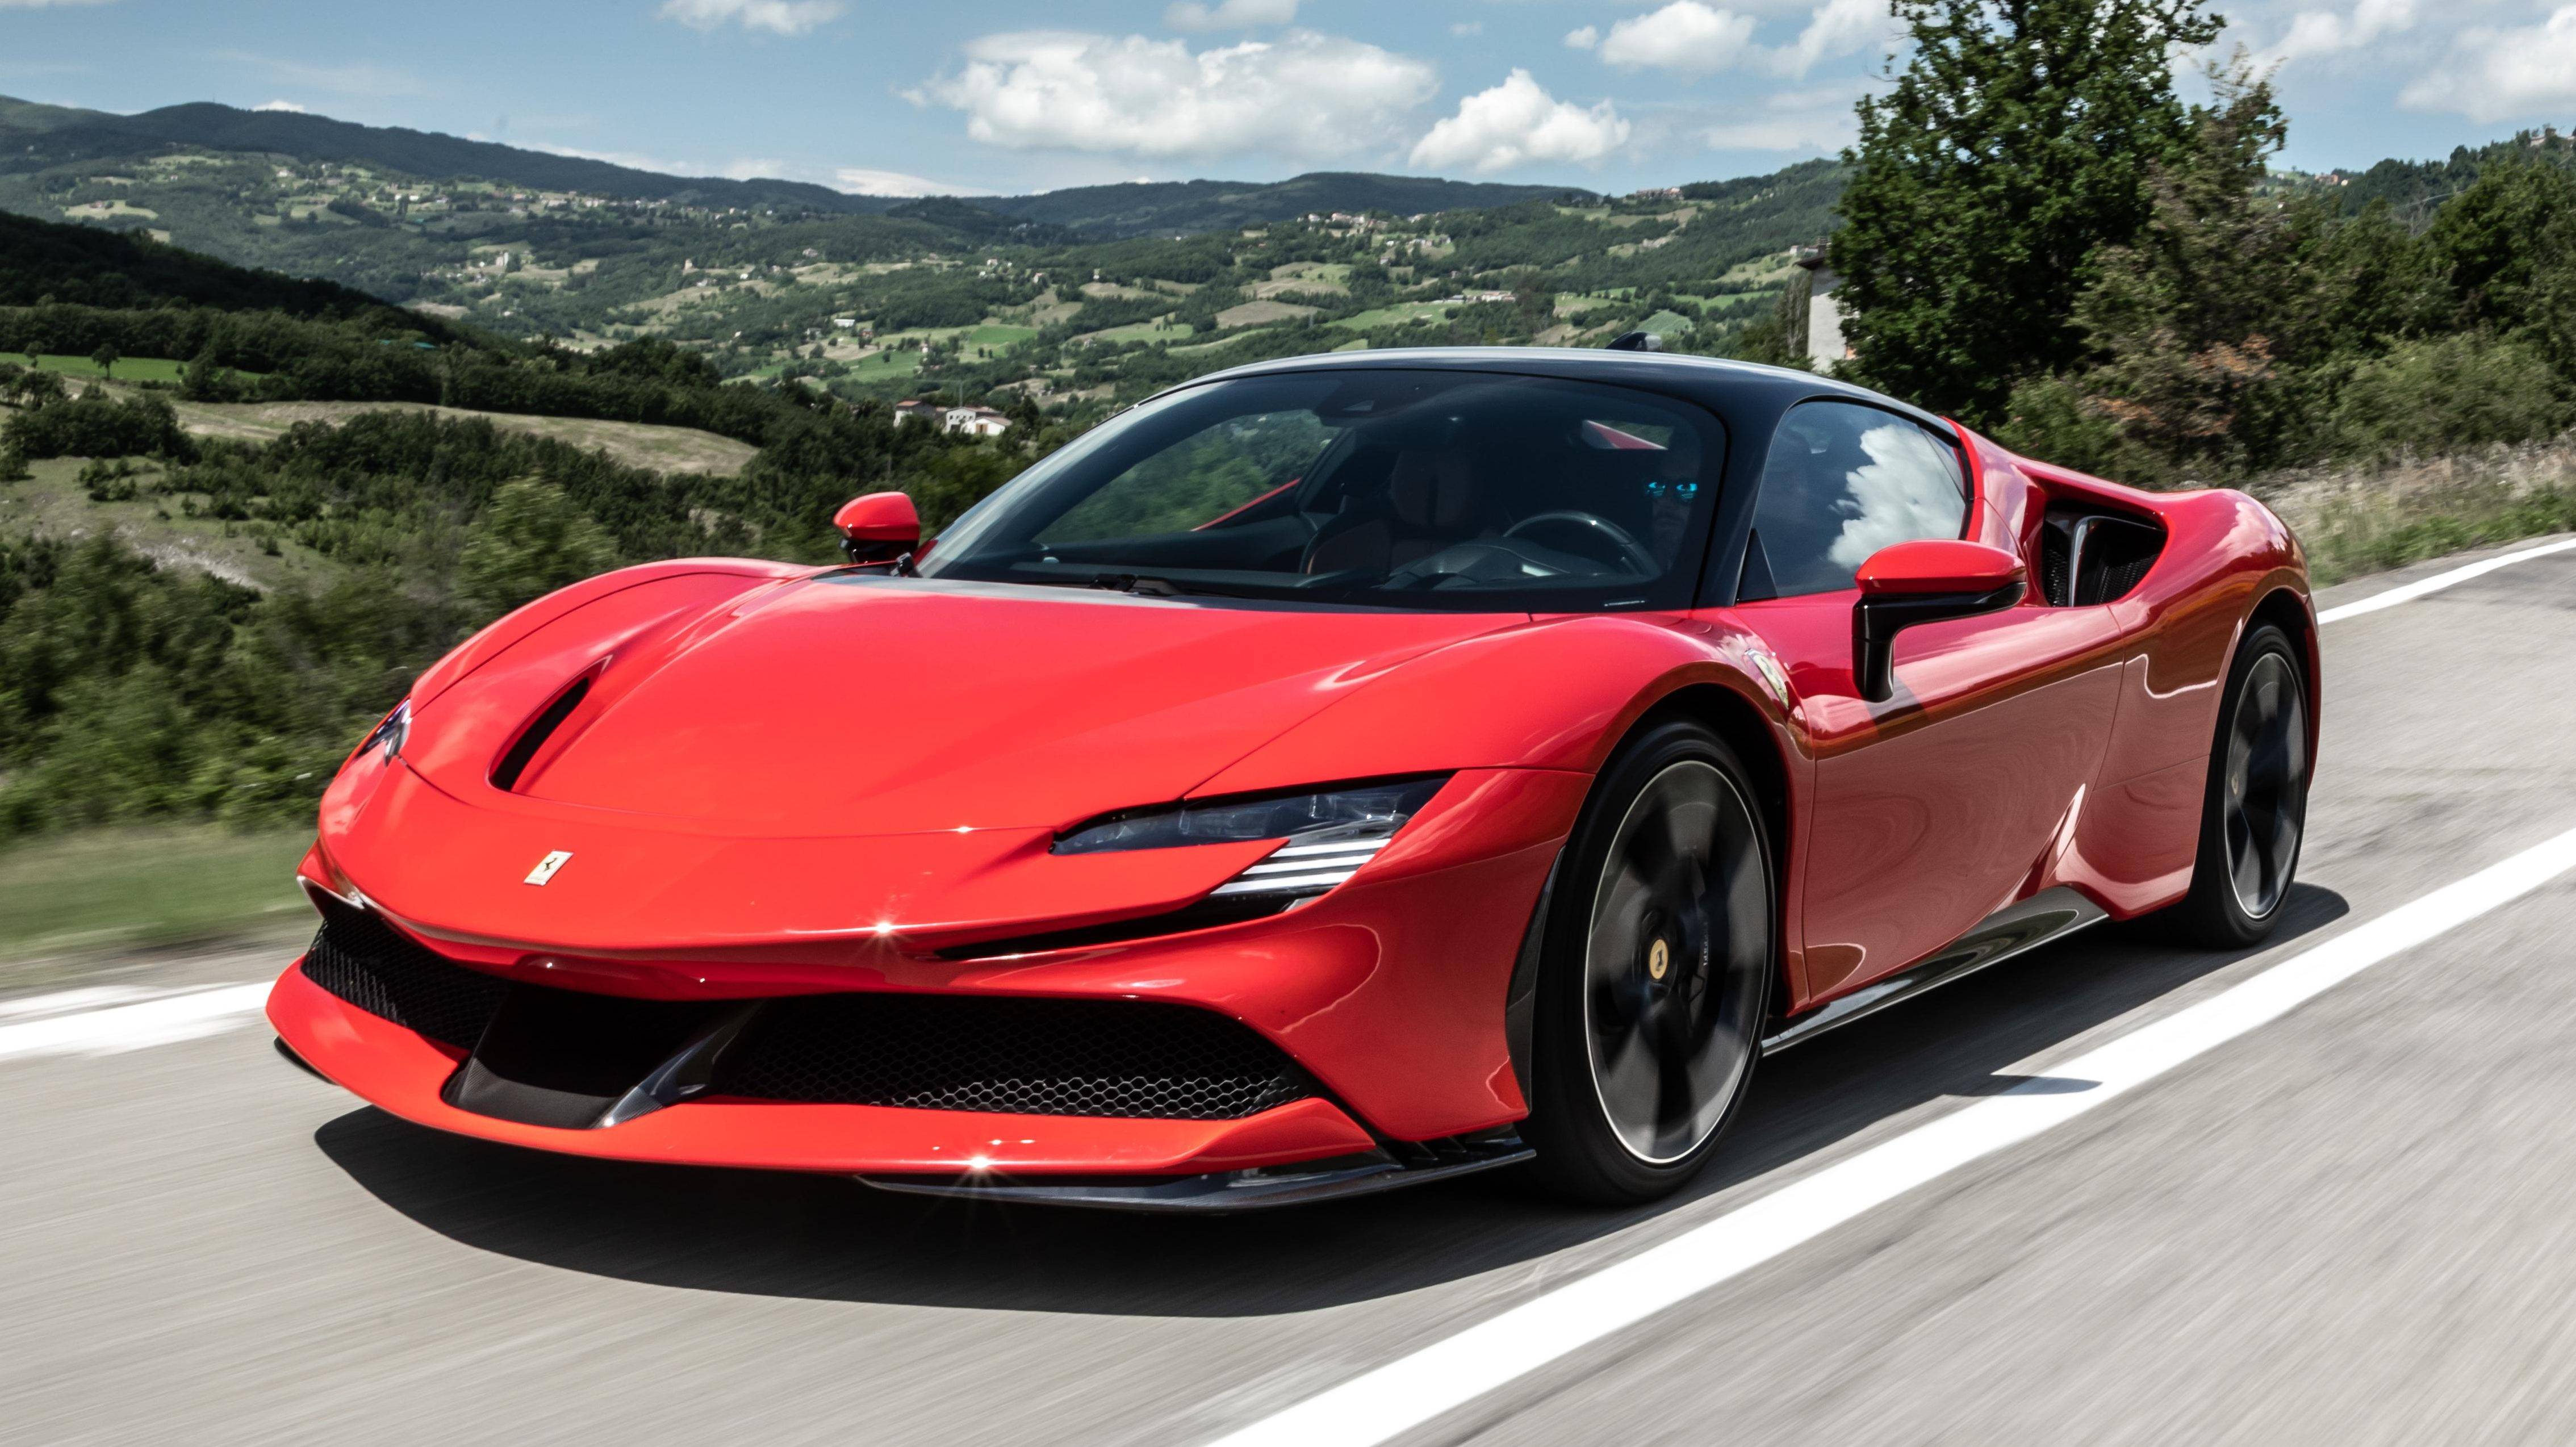 Ferrari confirma que terá esportivo elétrico nos próximos anos